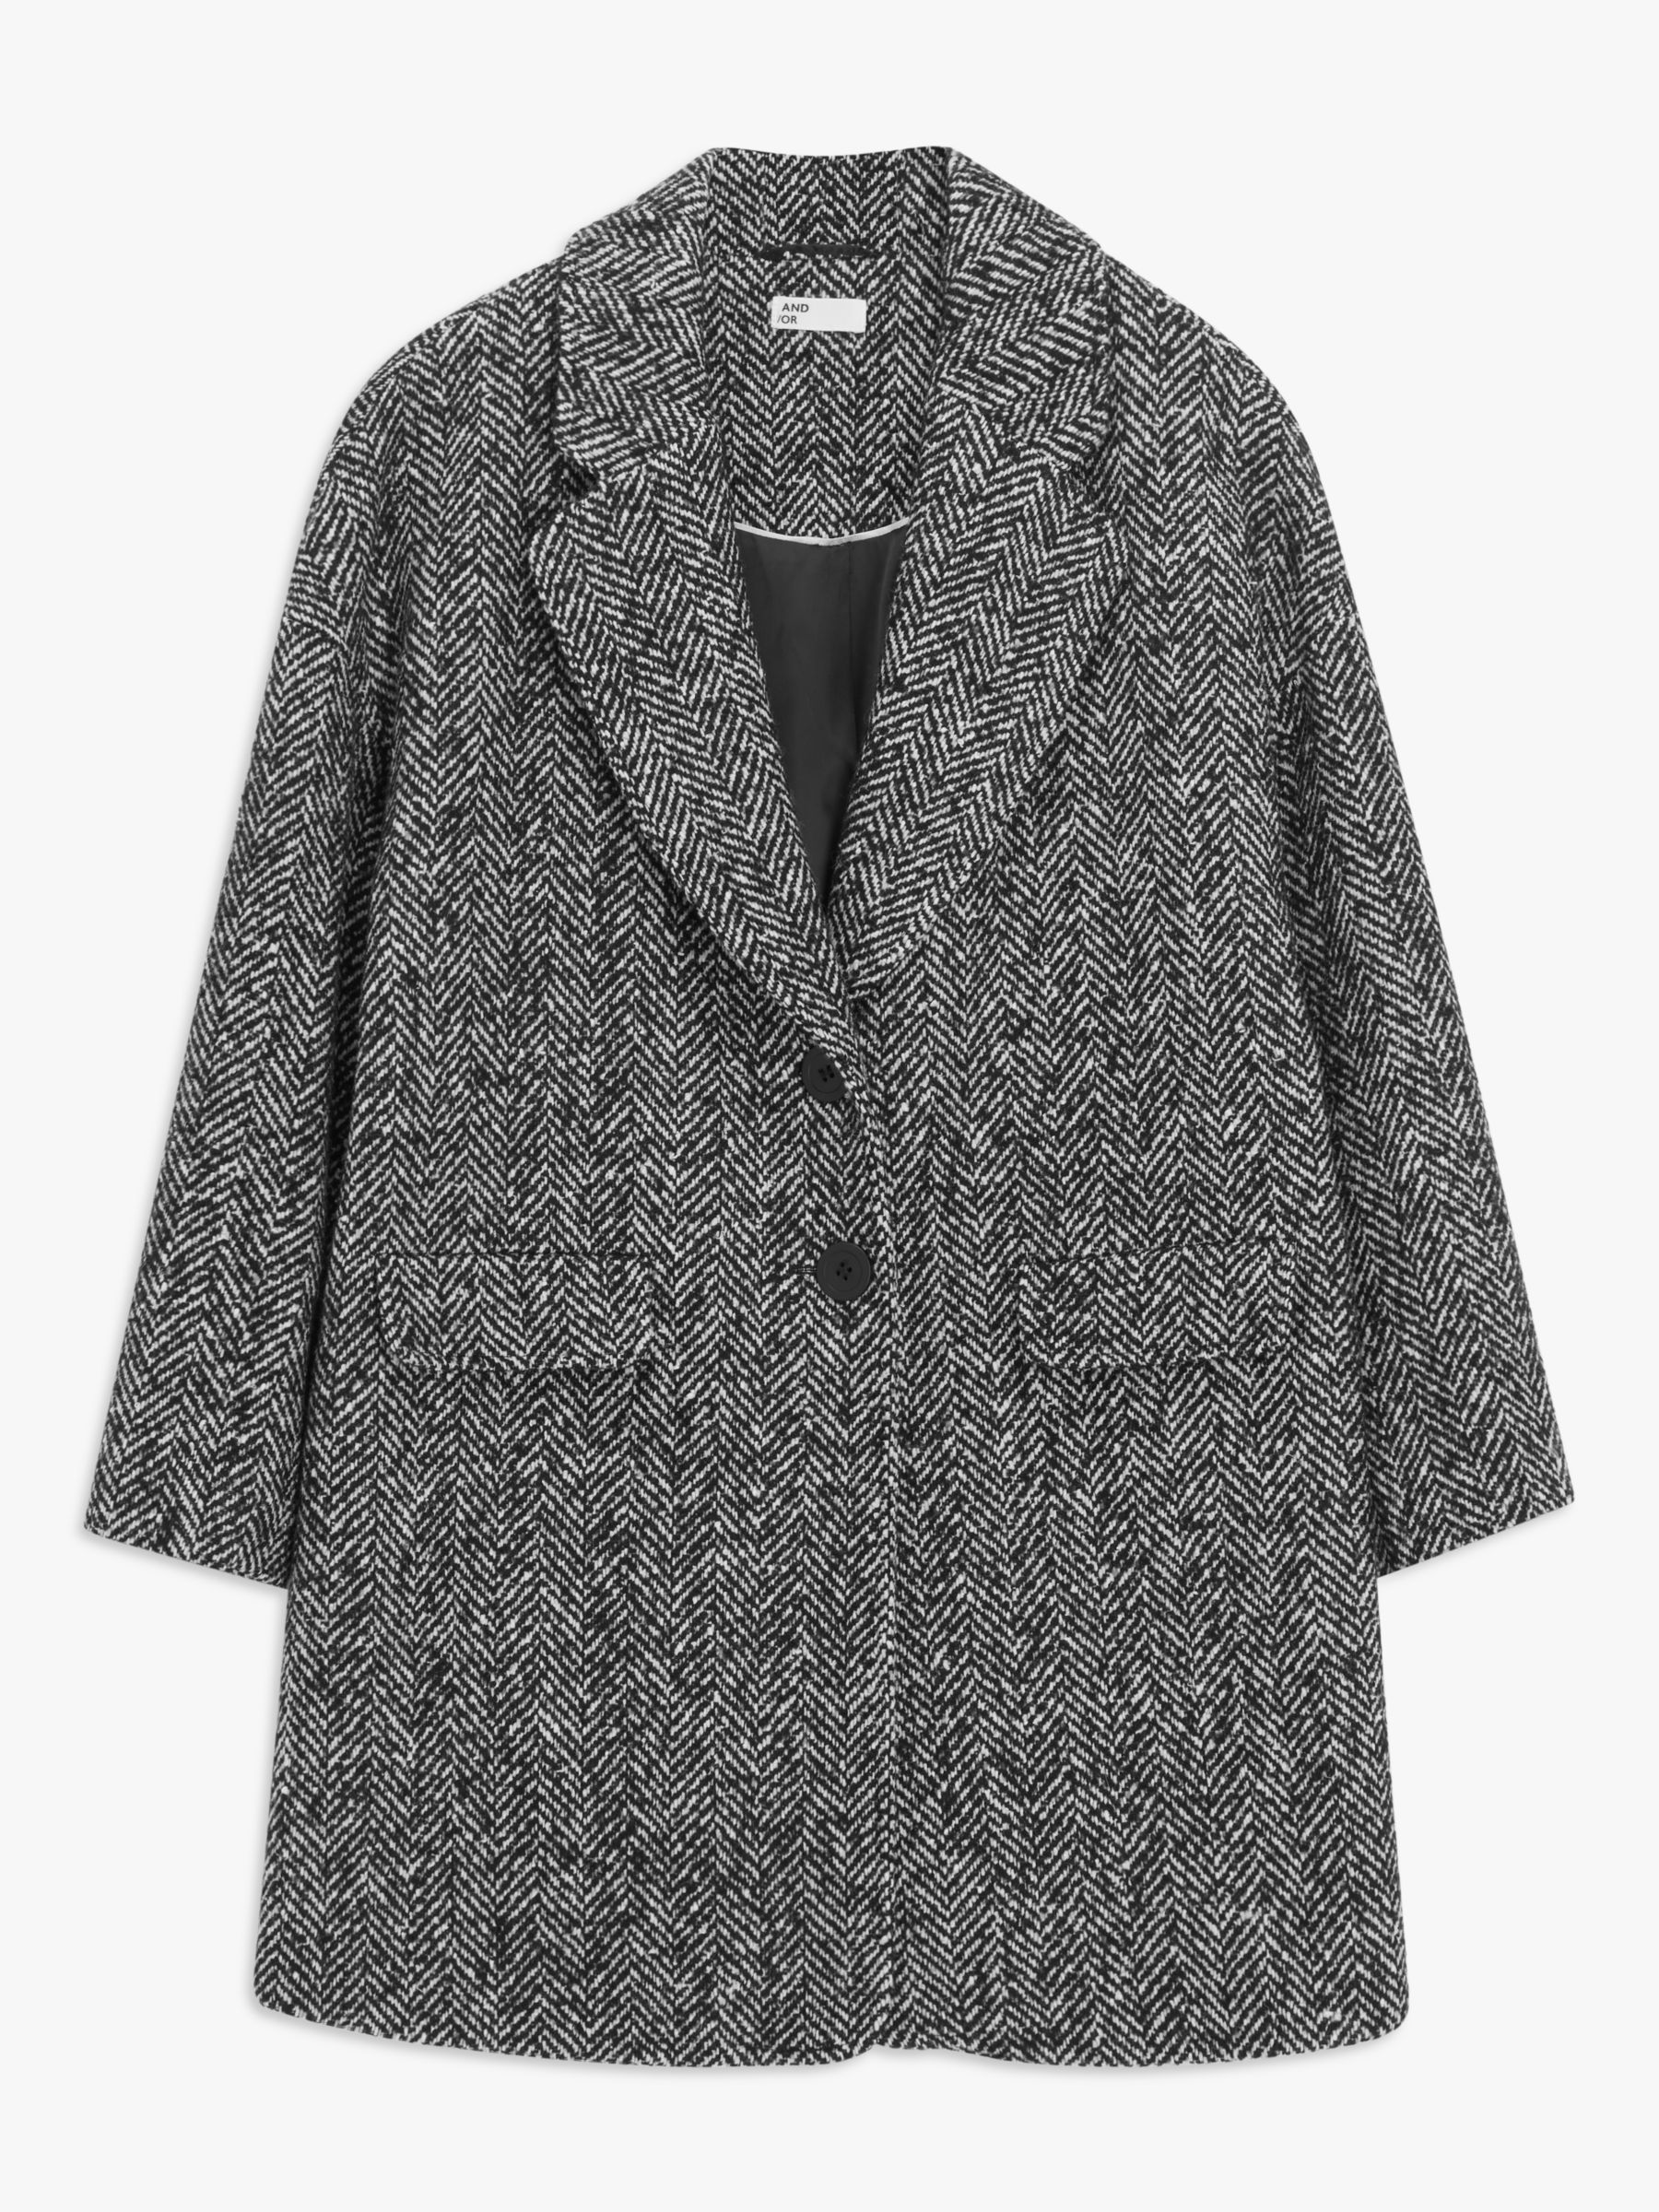 AND/OR Bree Herringbone Tweed Coat, Black/White at John Lewis & Partners